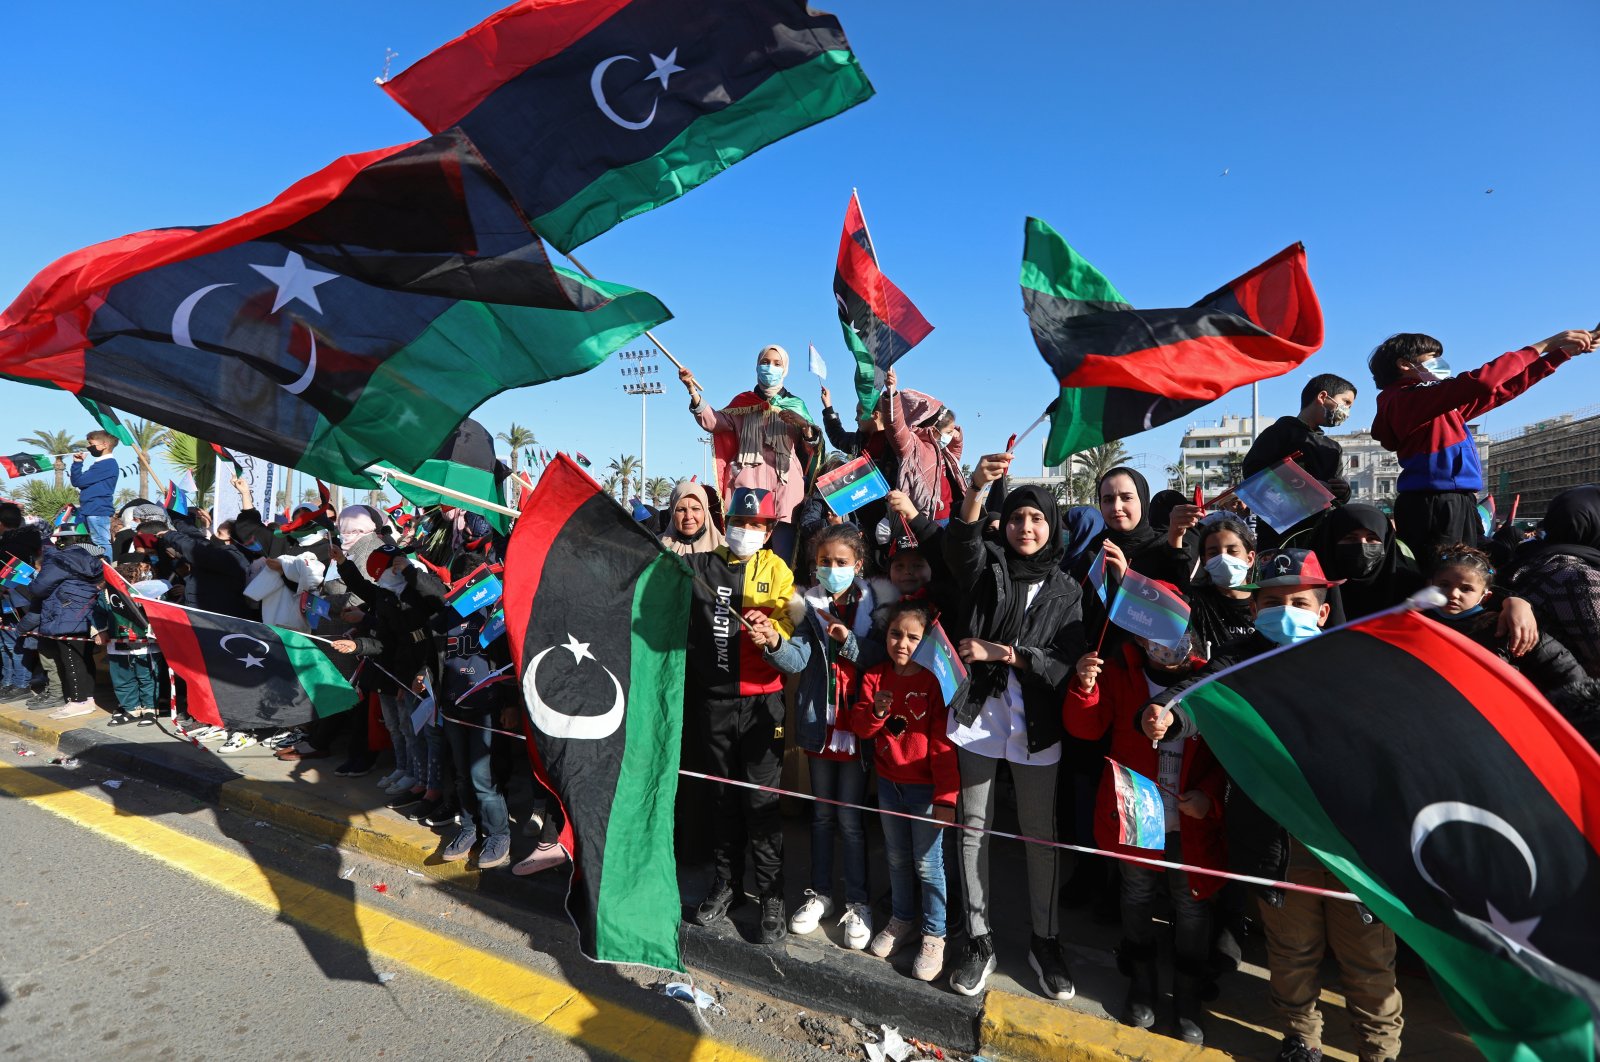 Parlemen Pro-Haftar membentuk komite untuk mengamati pemilihan Libya